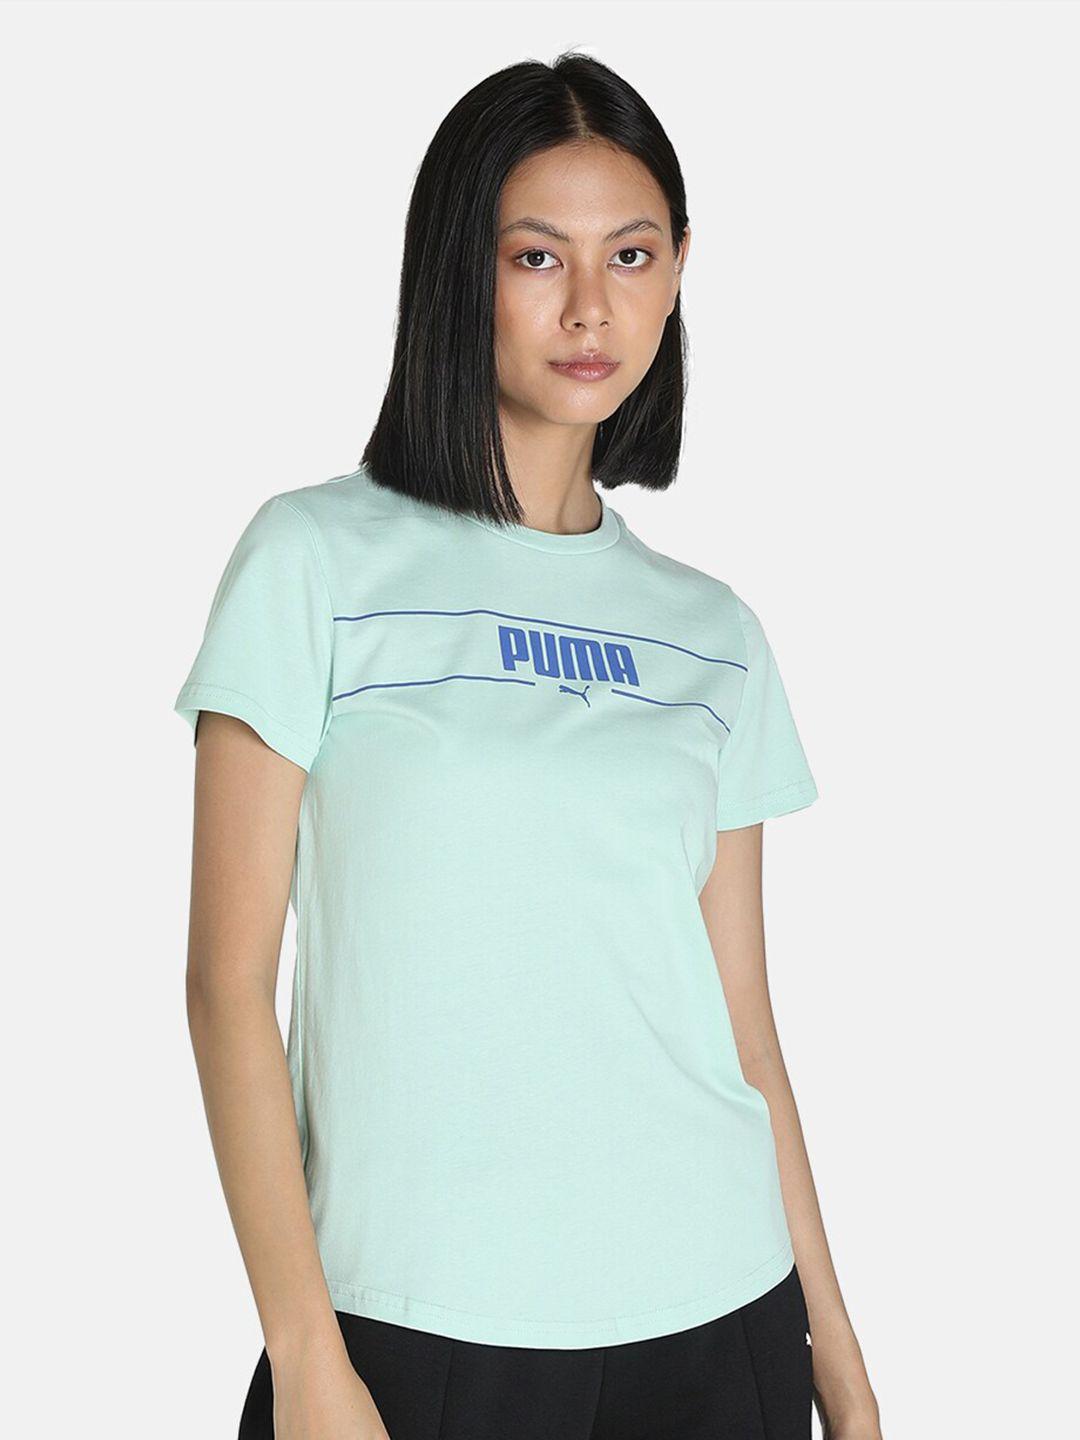 Puma Women Green Brand Logo Printed Training or Gym Cotton T-shirt